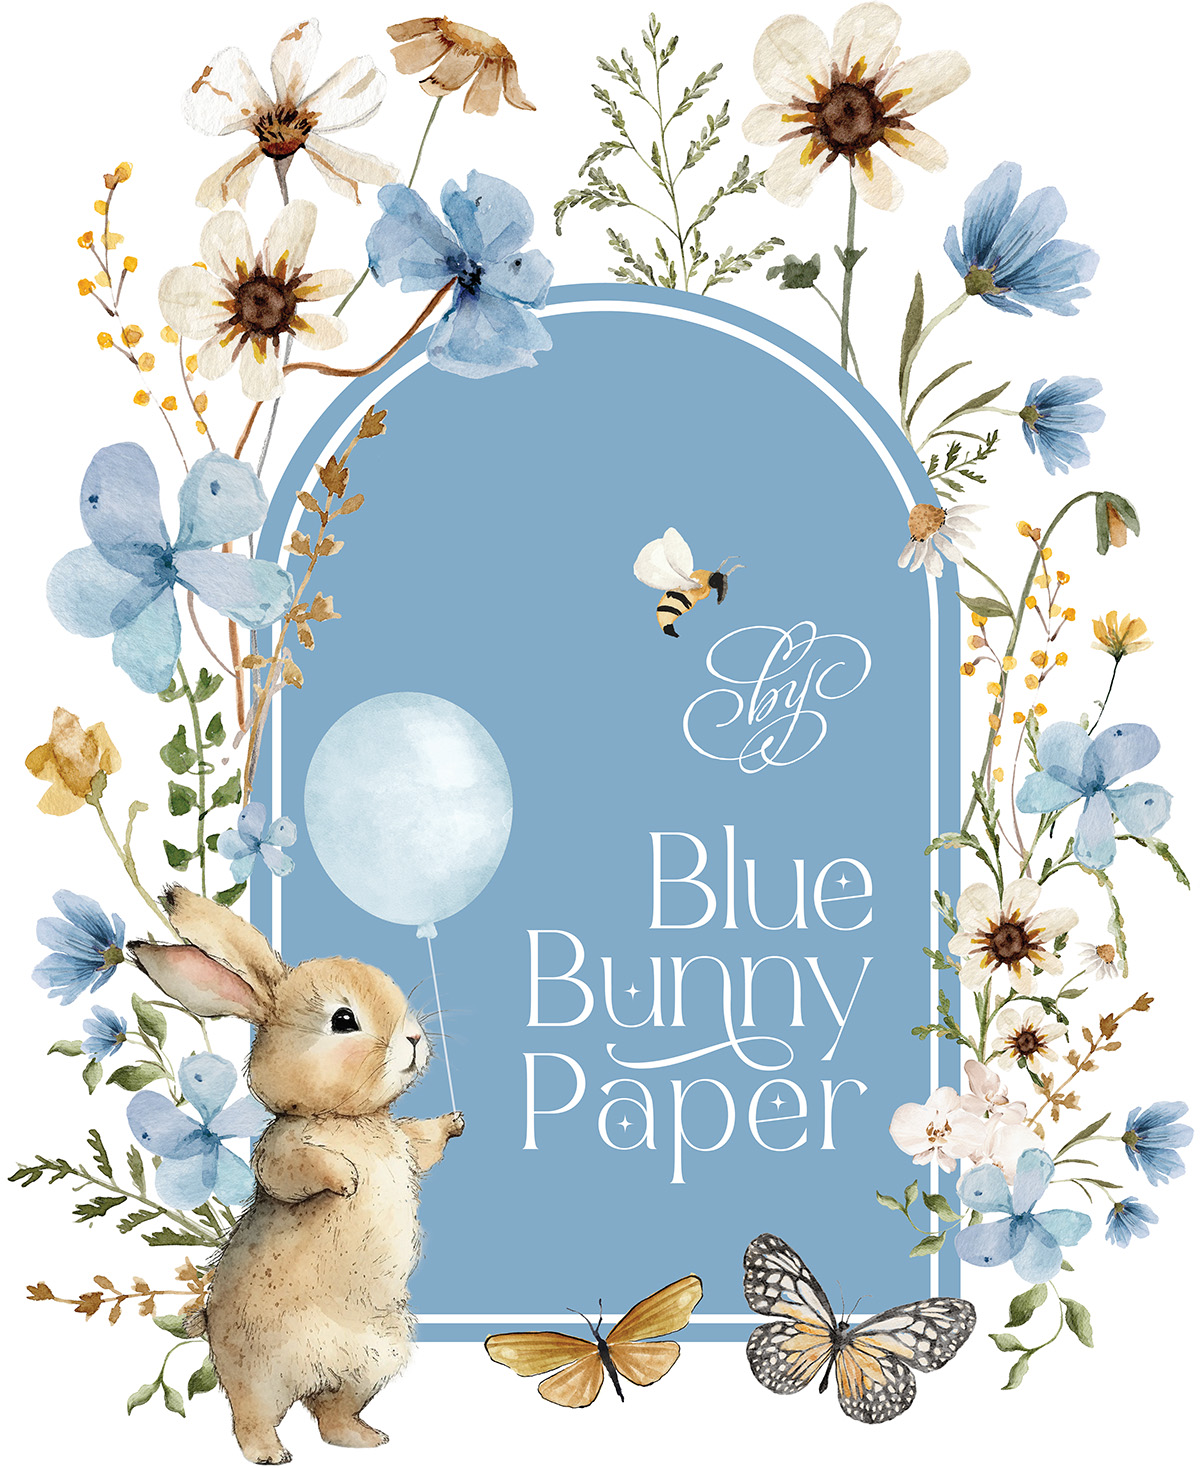 Blue Bunny Paper Copany illustration